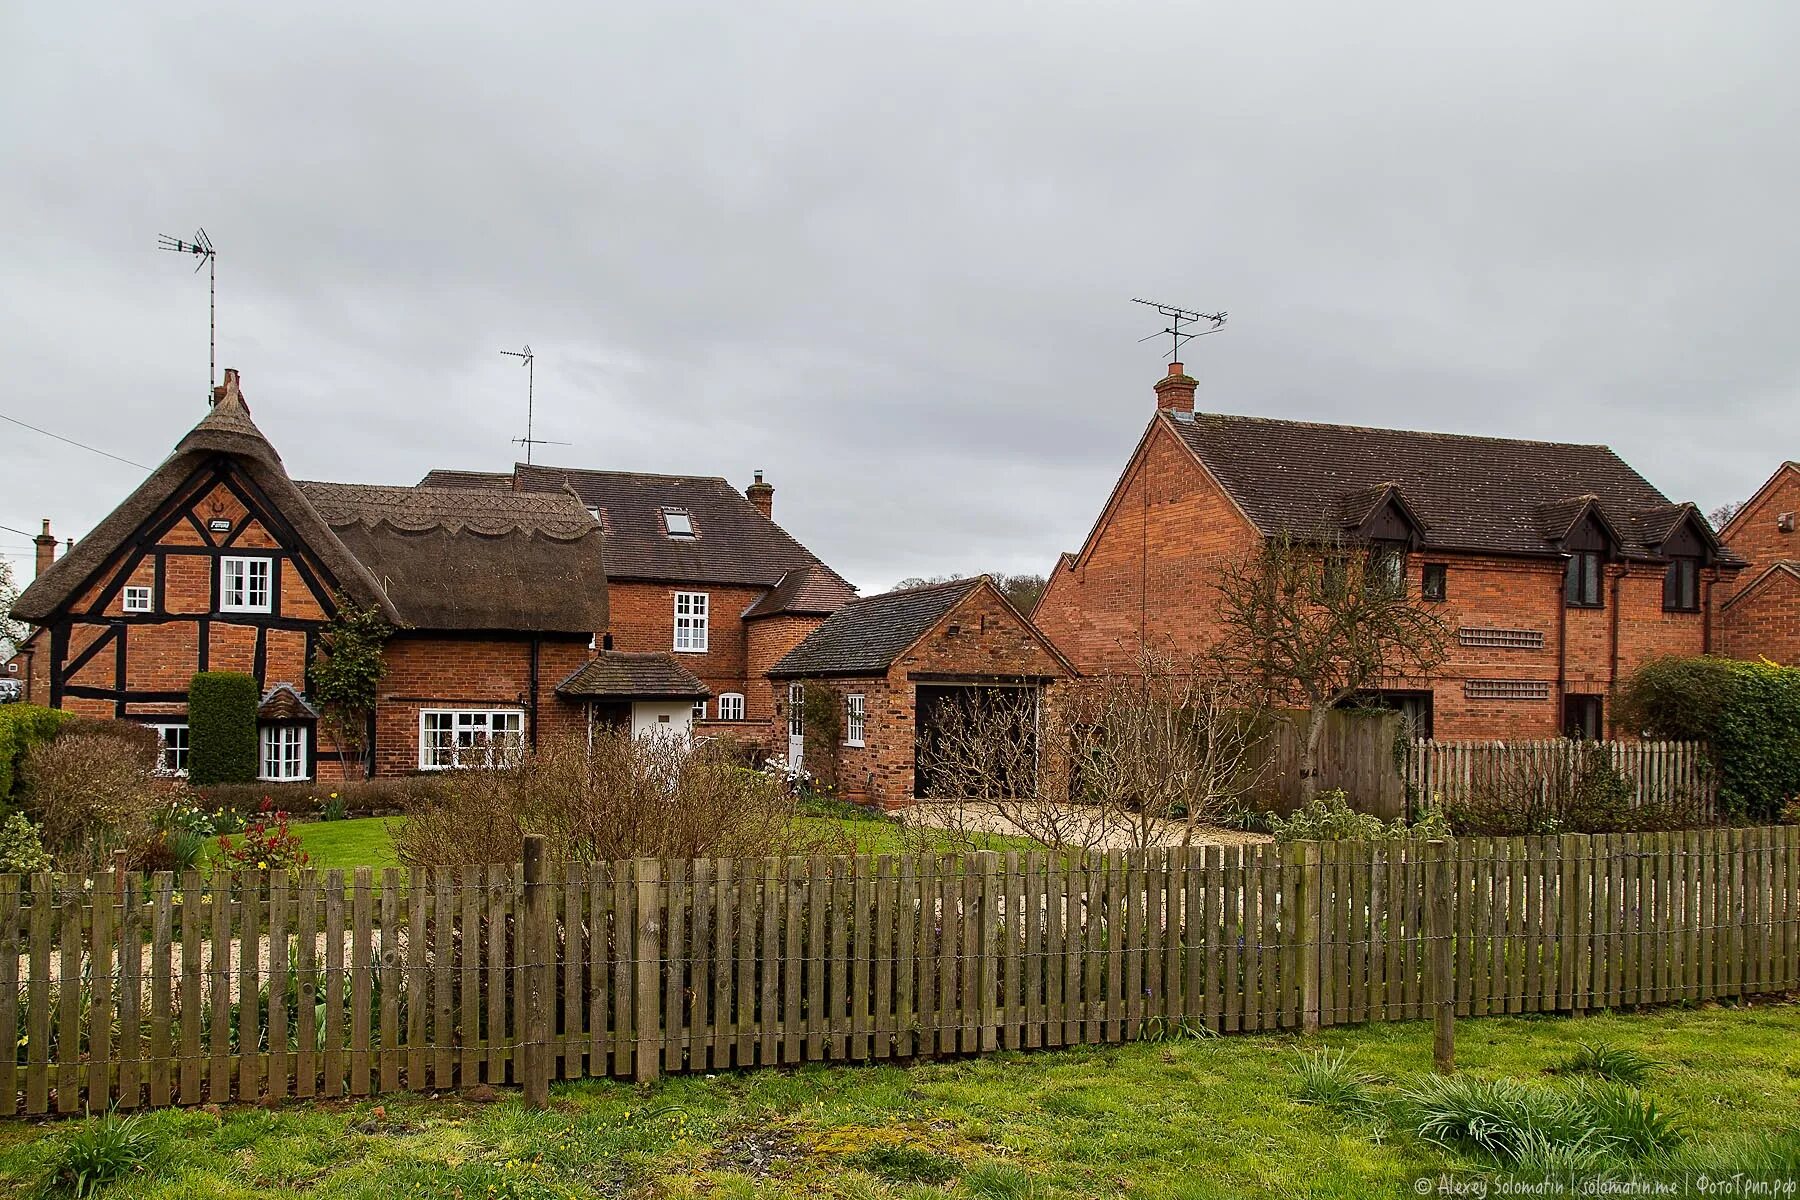 В деревне 18. Деревня Stoneleigh Англия. Англия деревня 18 век. Деревня Слэптон Сэндс, Англия. Деревня 17-18 века Англия.